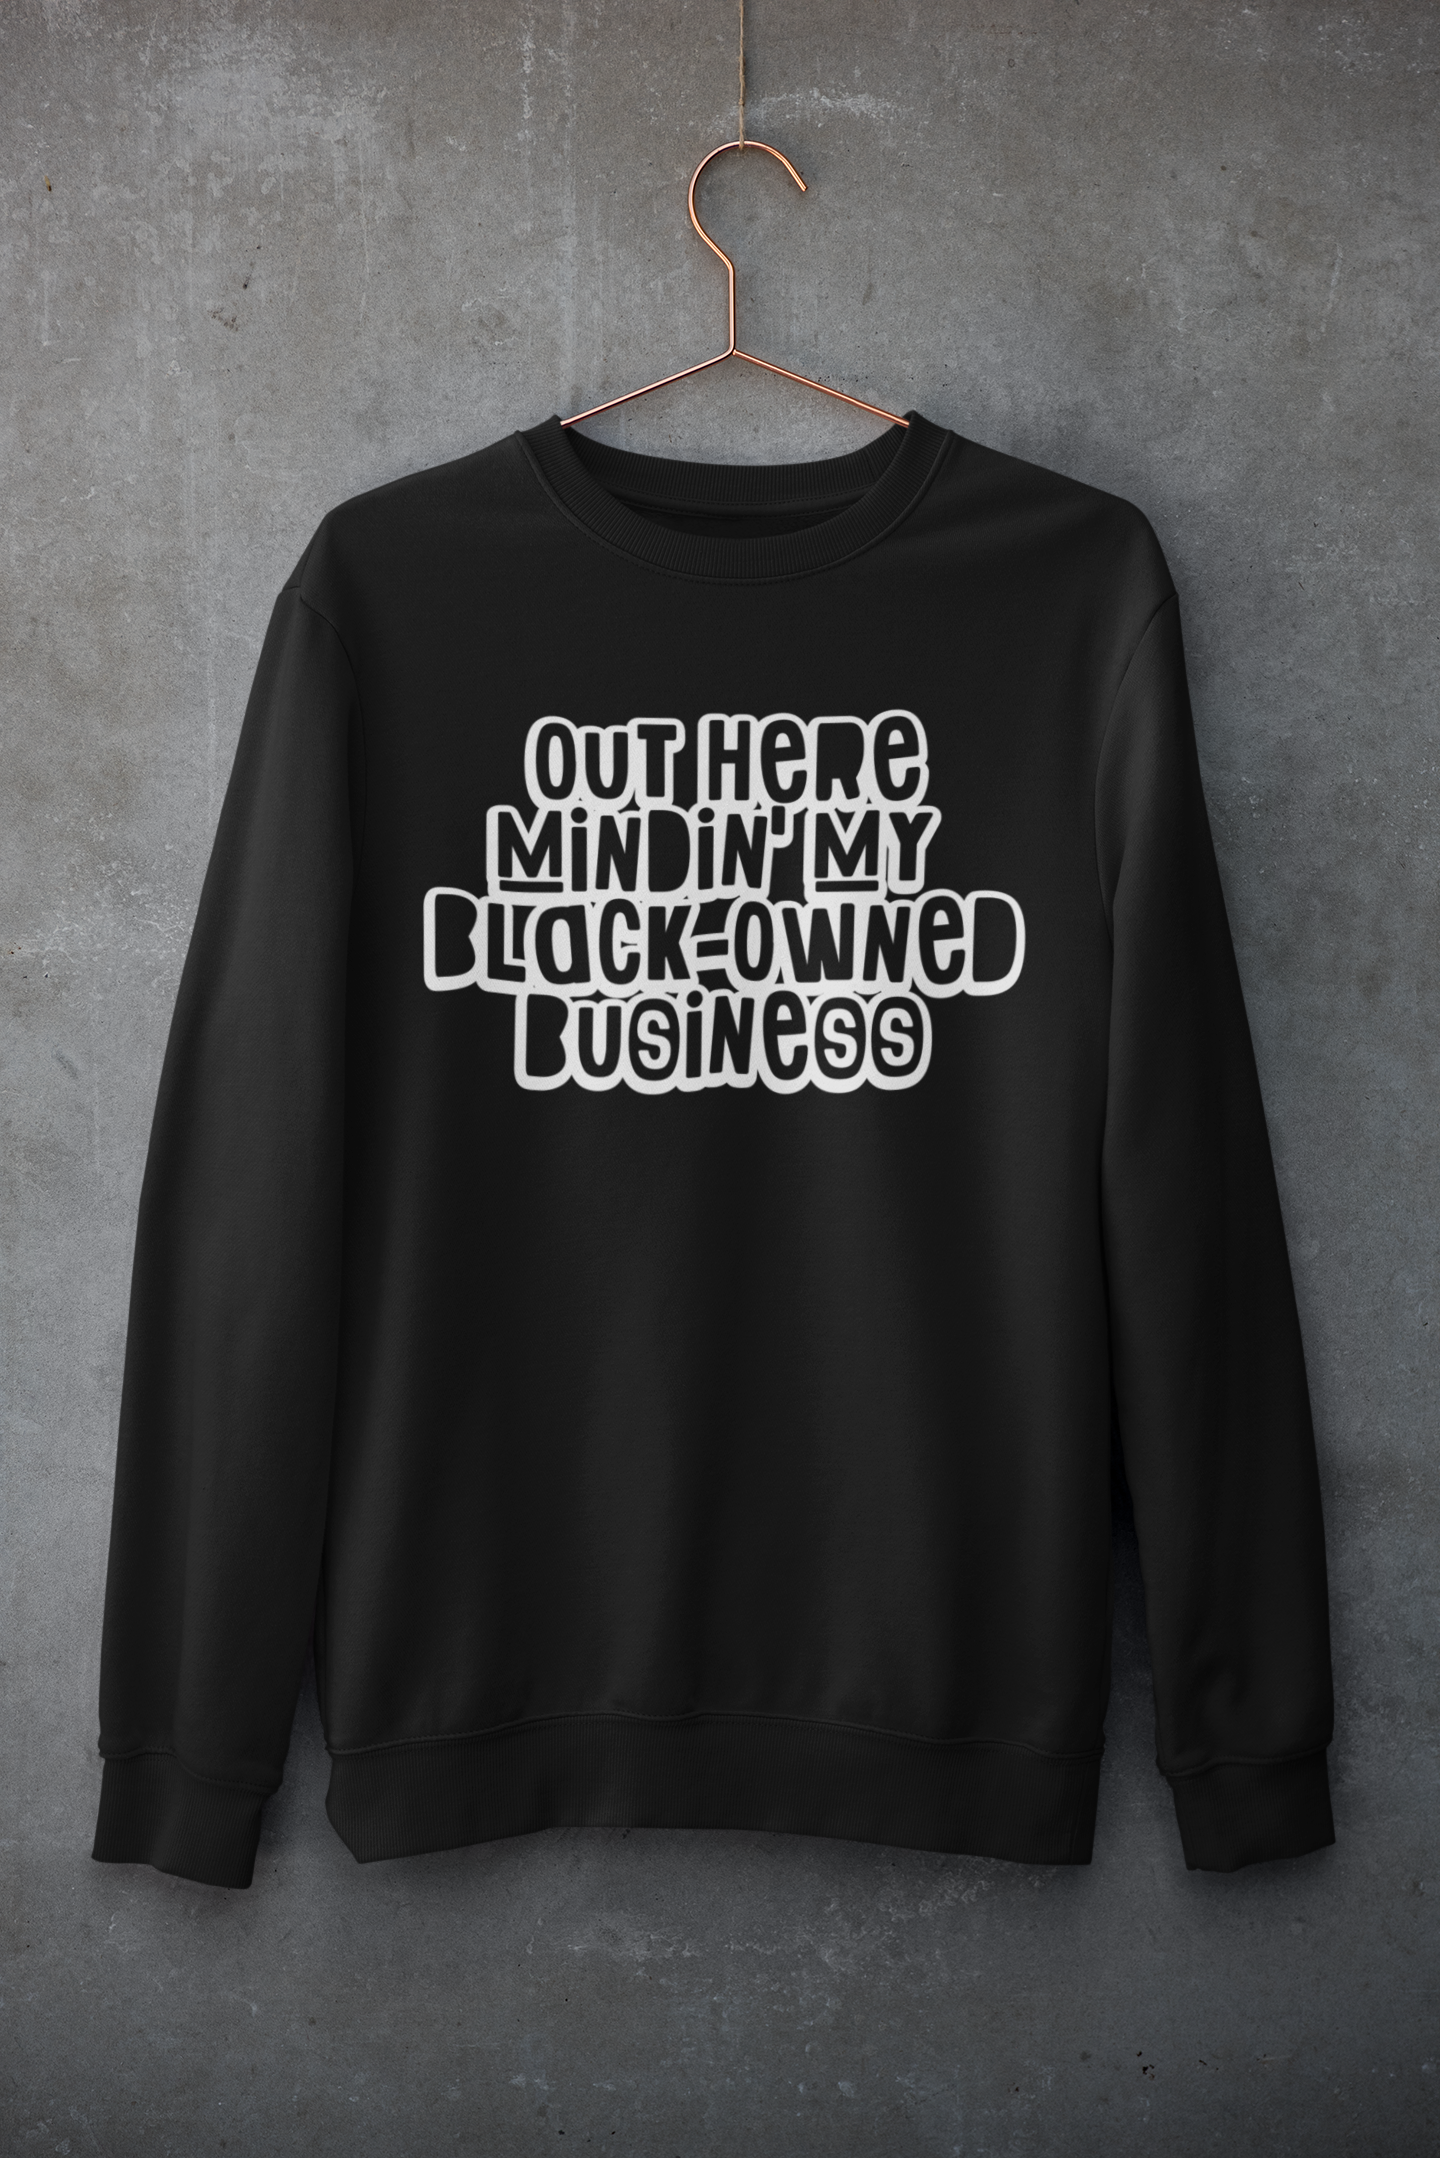 Mindin' My Black-Owned Business Sweatshirt